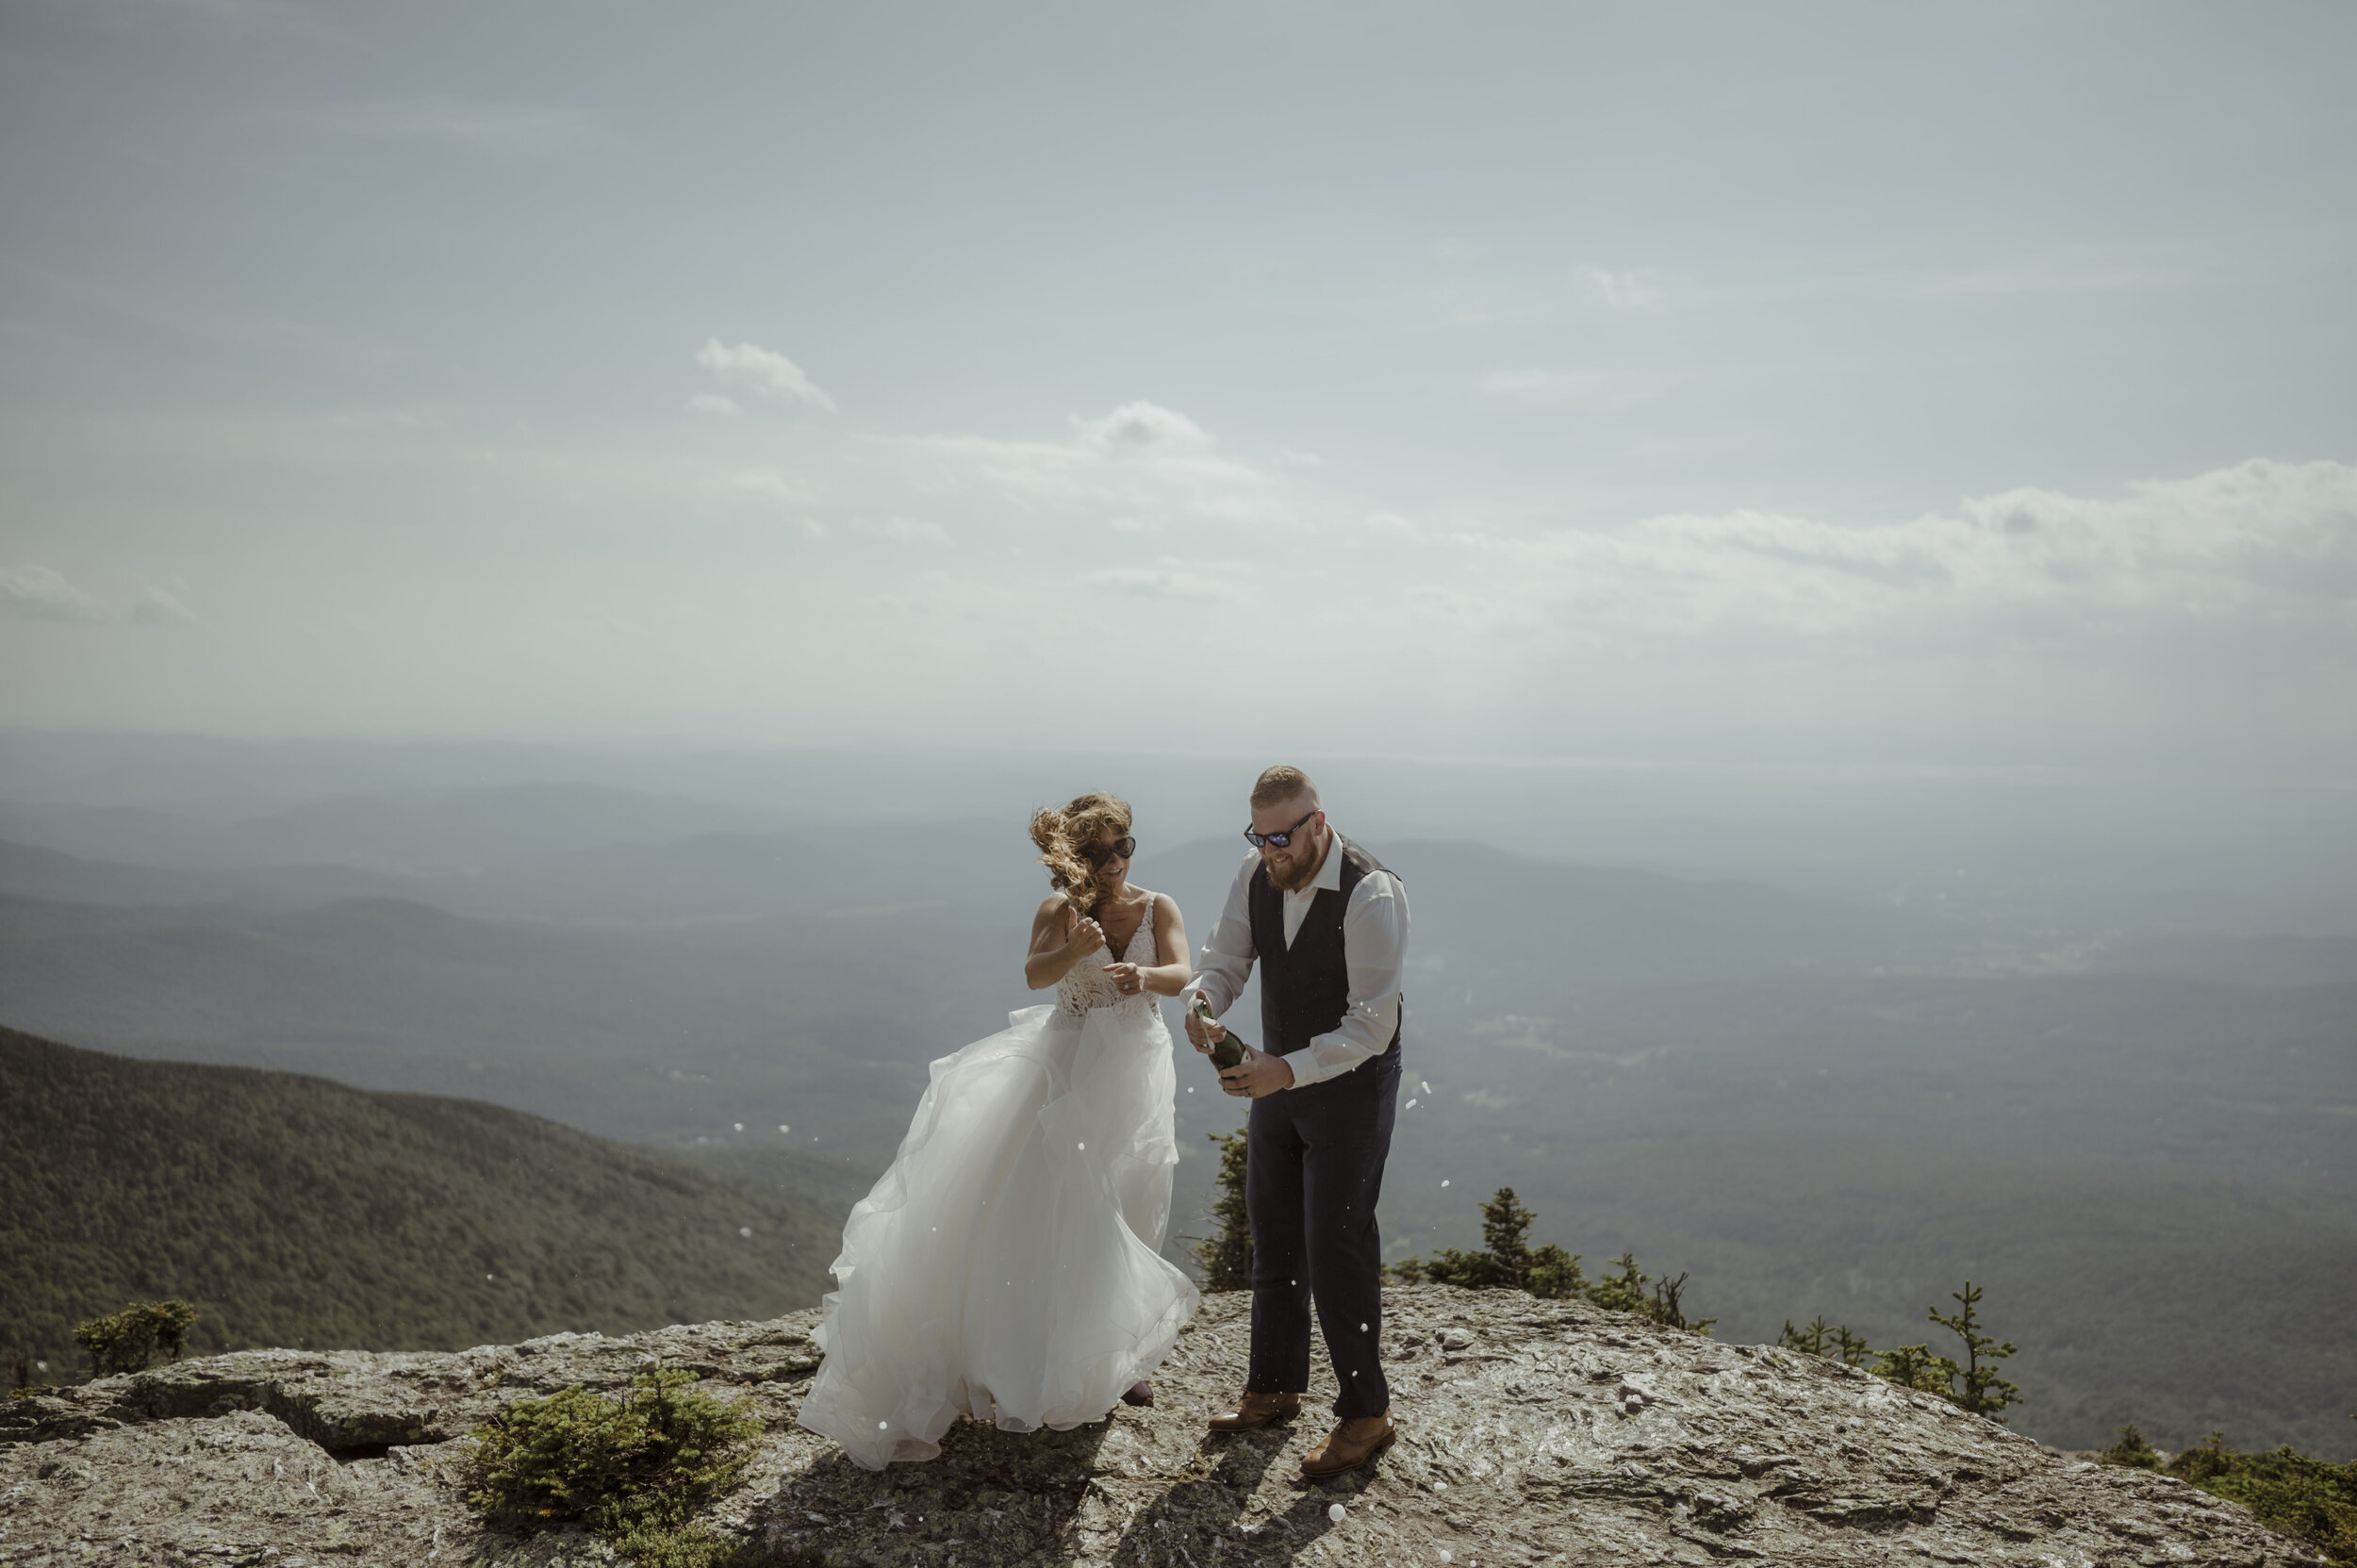 Stowe Vermont wedding photographer / Mount Mansfield elopement